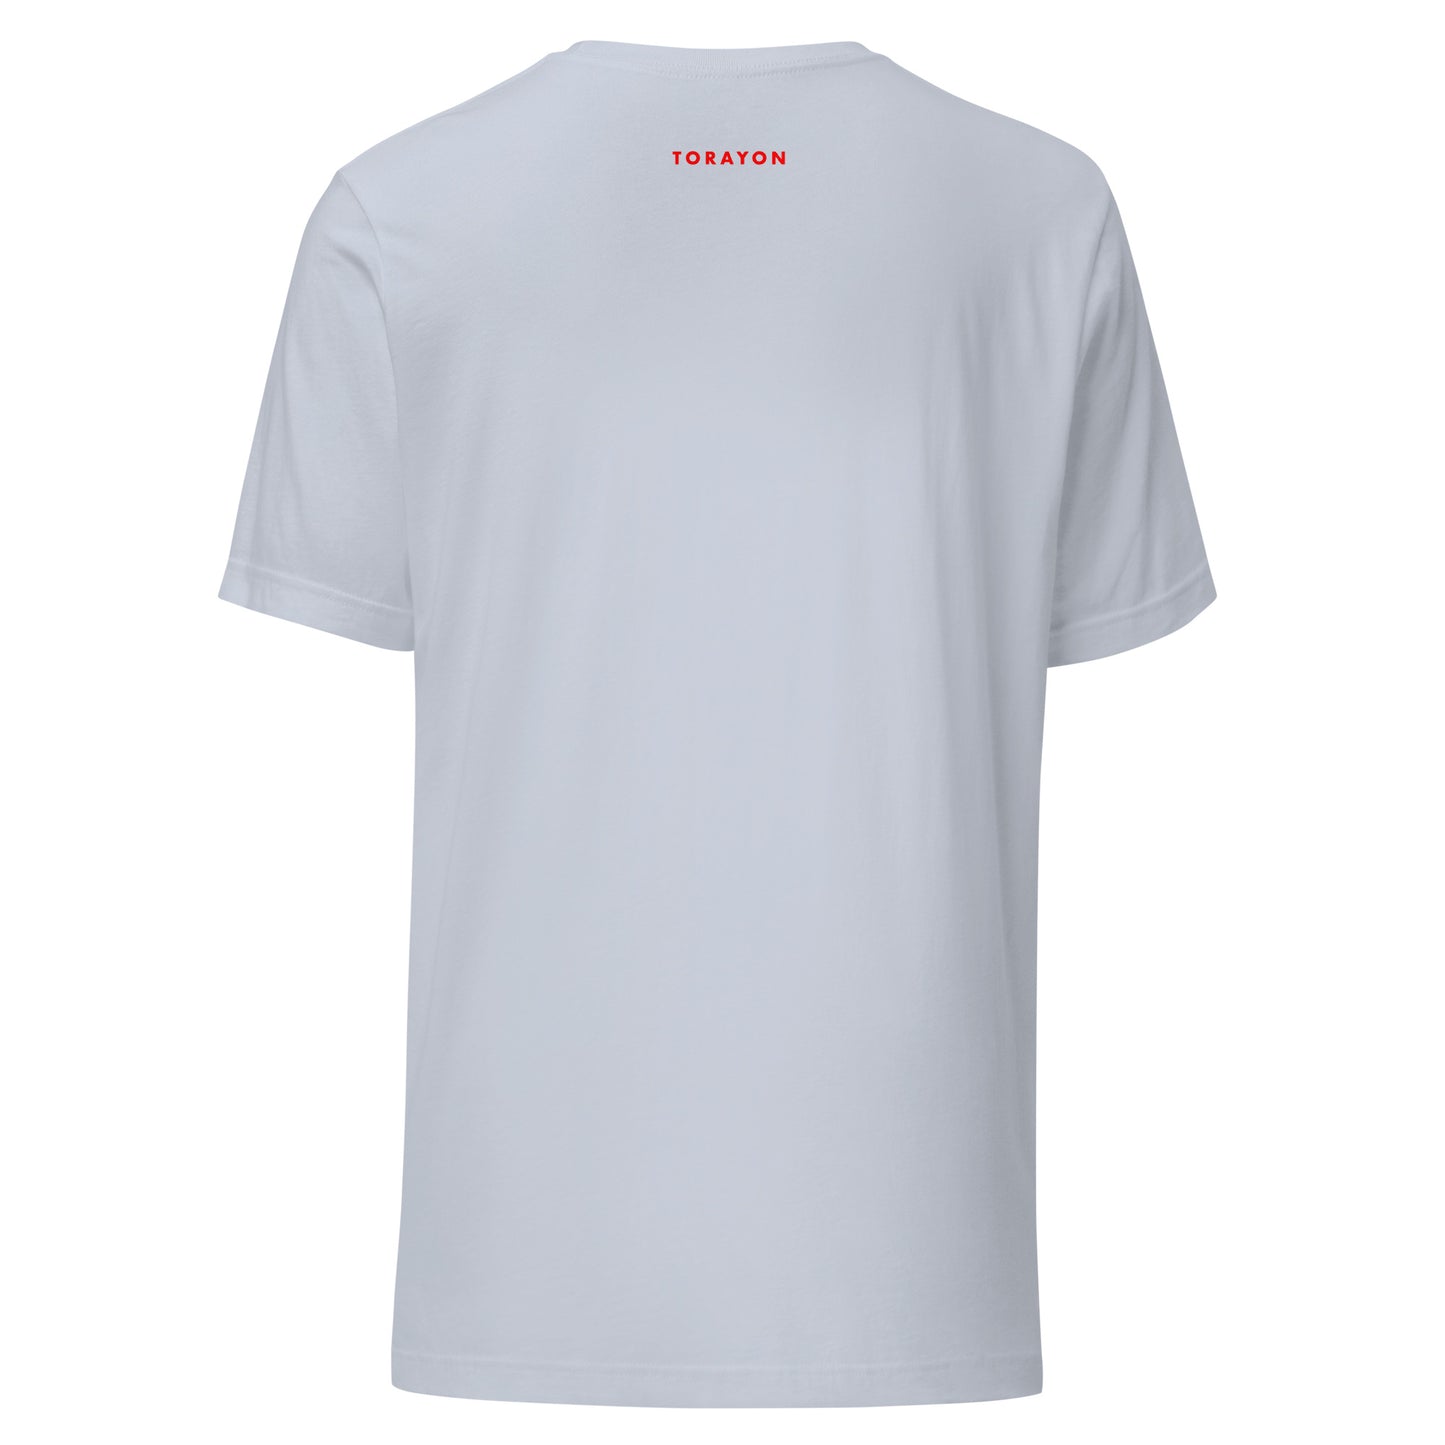 TORAYON Halo (R) Unisex T-shirt